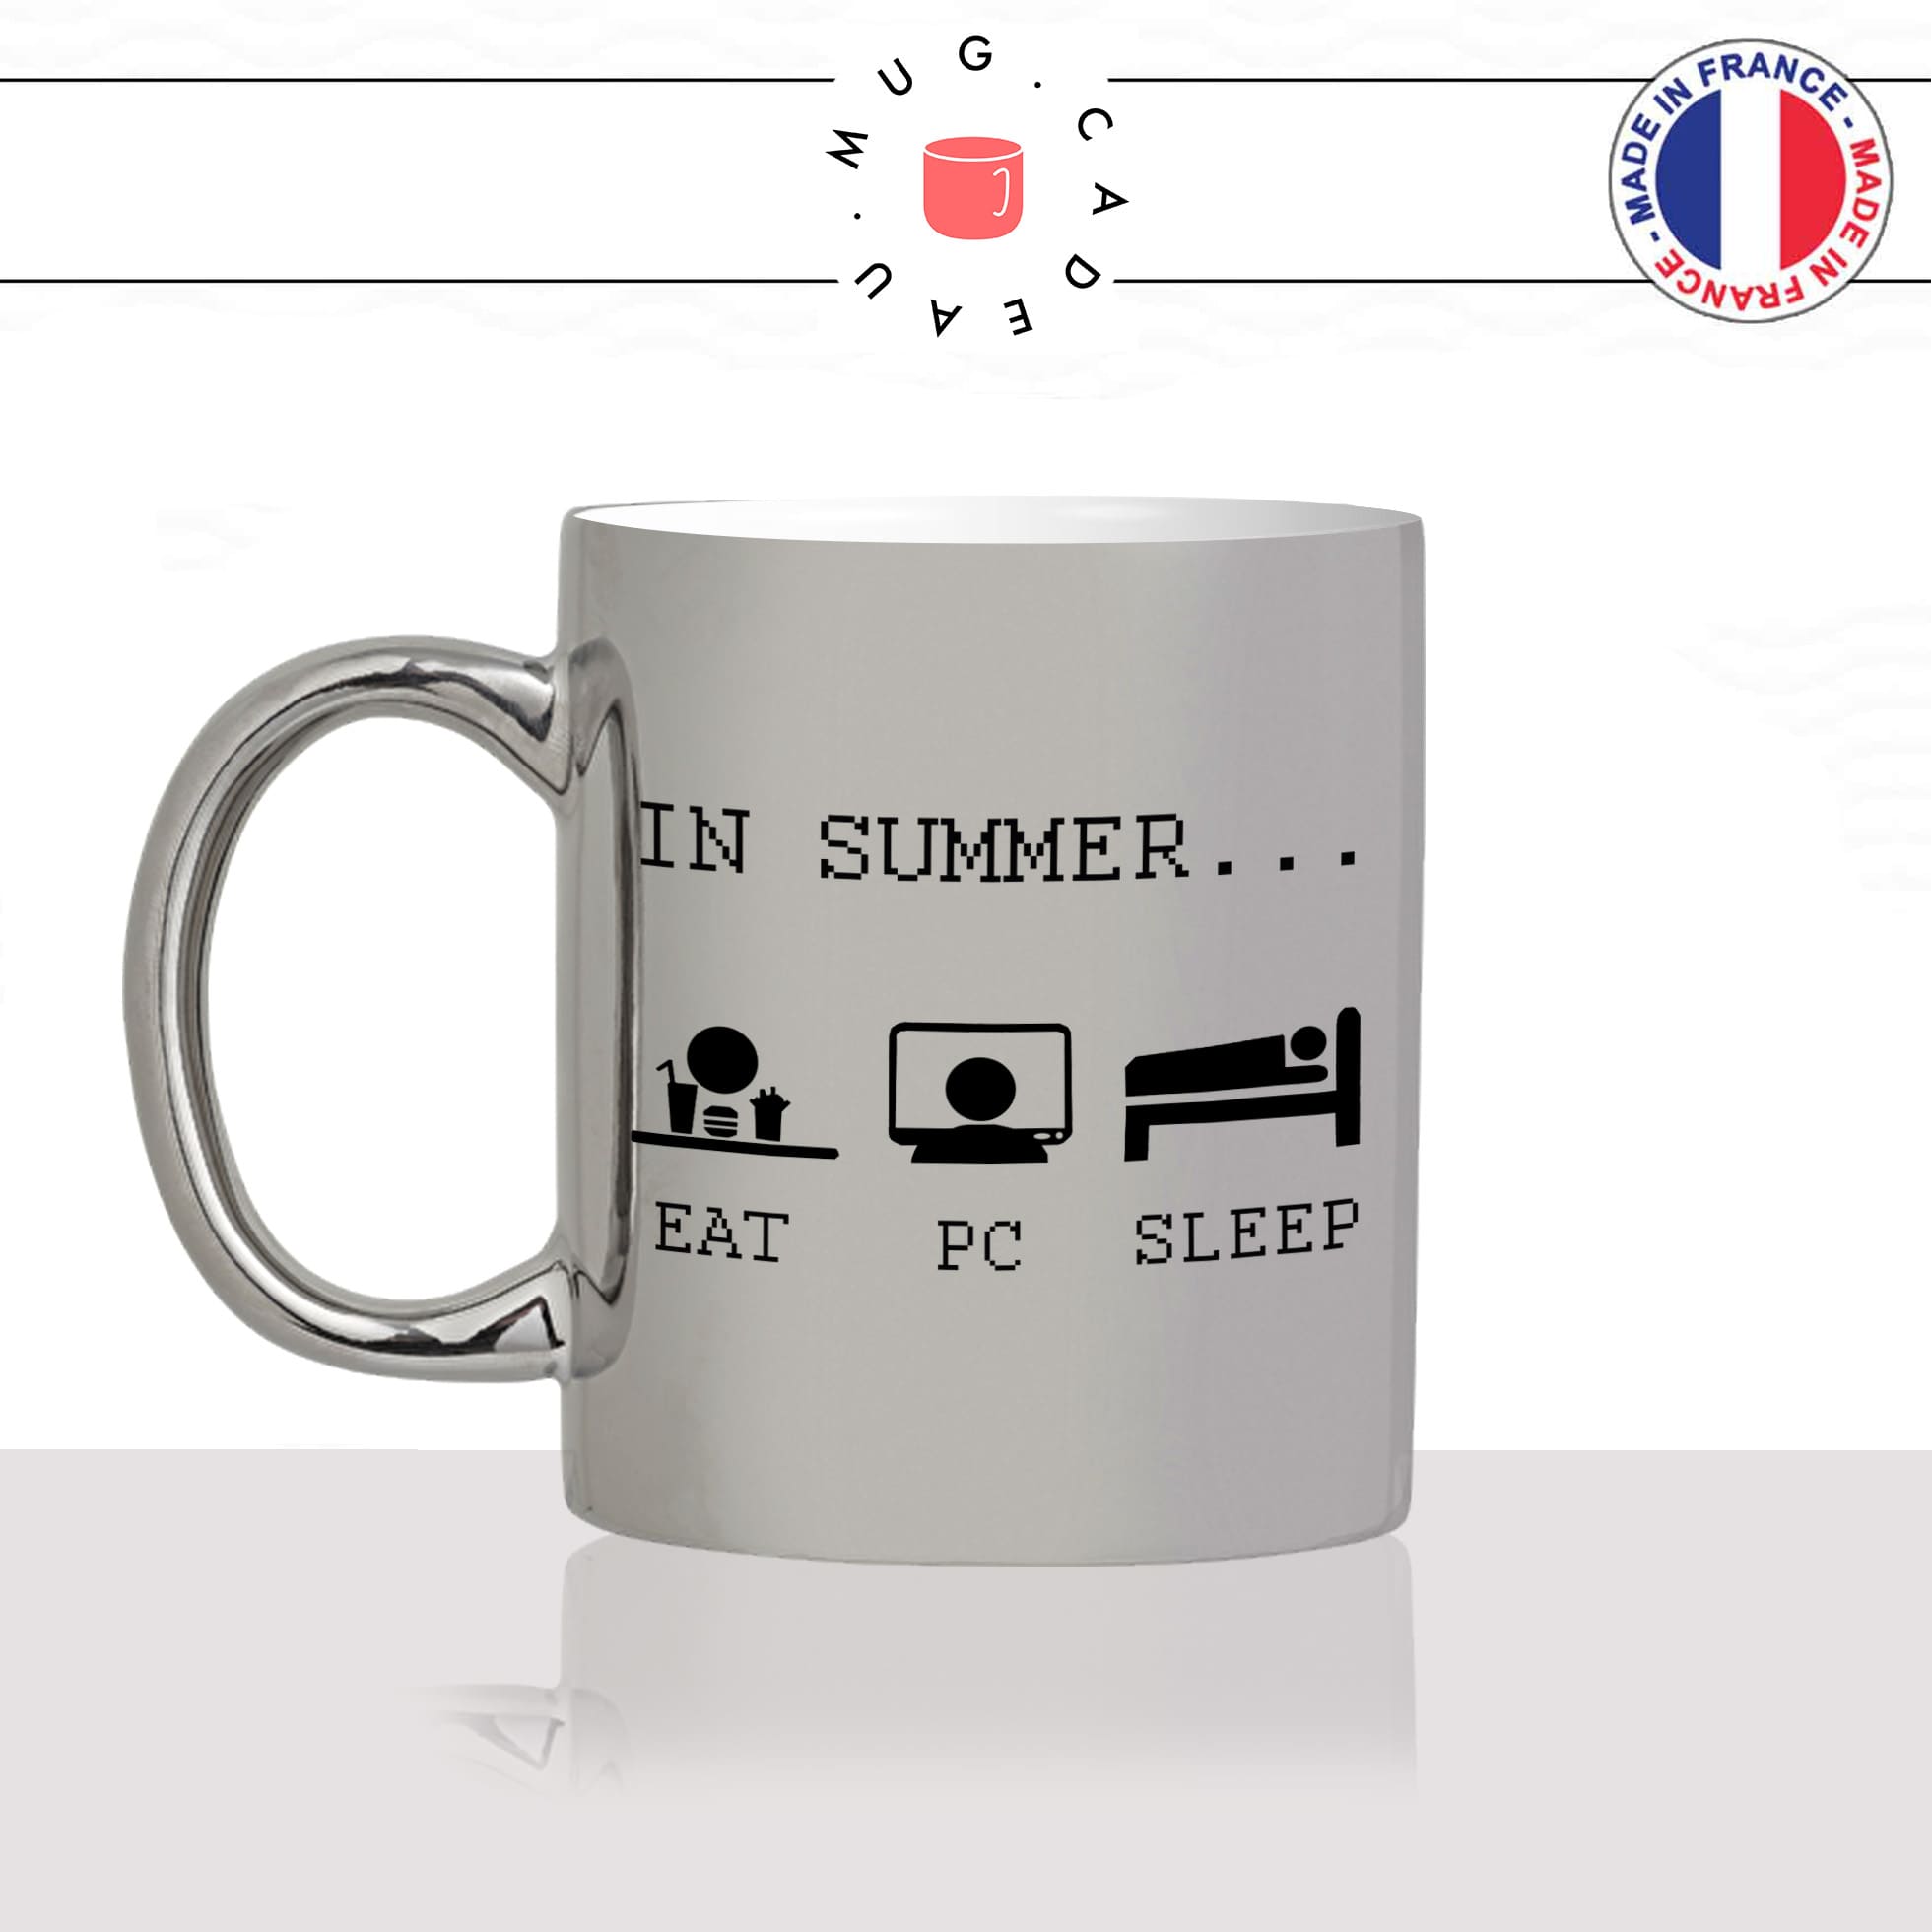 mug-tasse-argent-argenté-silver-geek-in-summer-eat-pc-sleep-été-jeux-video-gamer-gaming-drole-original-idée-cadeau-fun-cool-café-thé